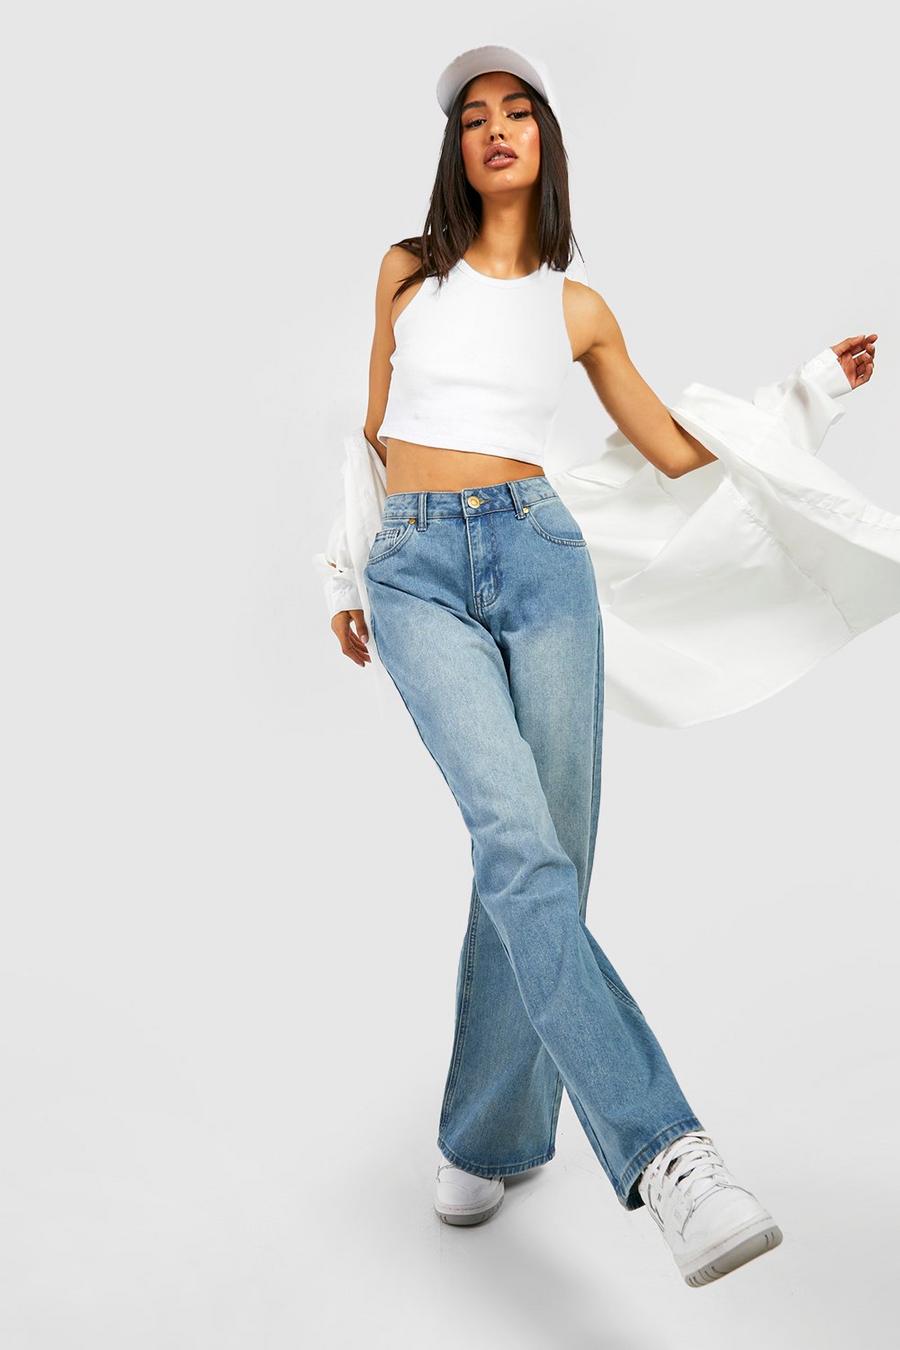 https://media.boohoo.com/i/boohoo/gzz46430_vintage%20blue_xl/female-vintage%20blue-mid-waist-vintage-wash-baggy-jeans/?w=900&qlt=default&fmt.jp2.qlt=70&fmt=auto&sm=fit